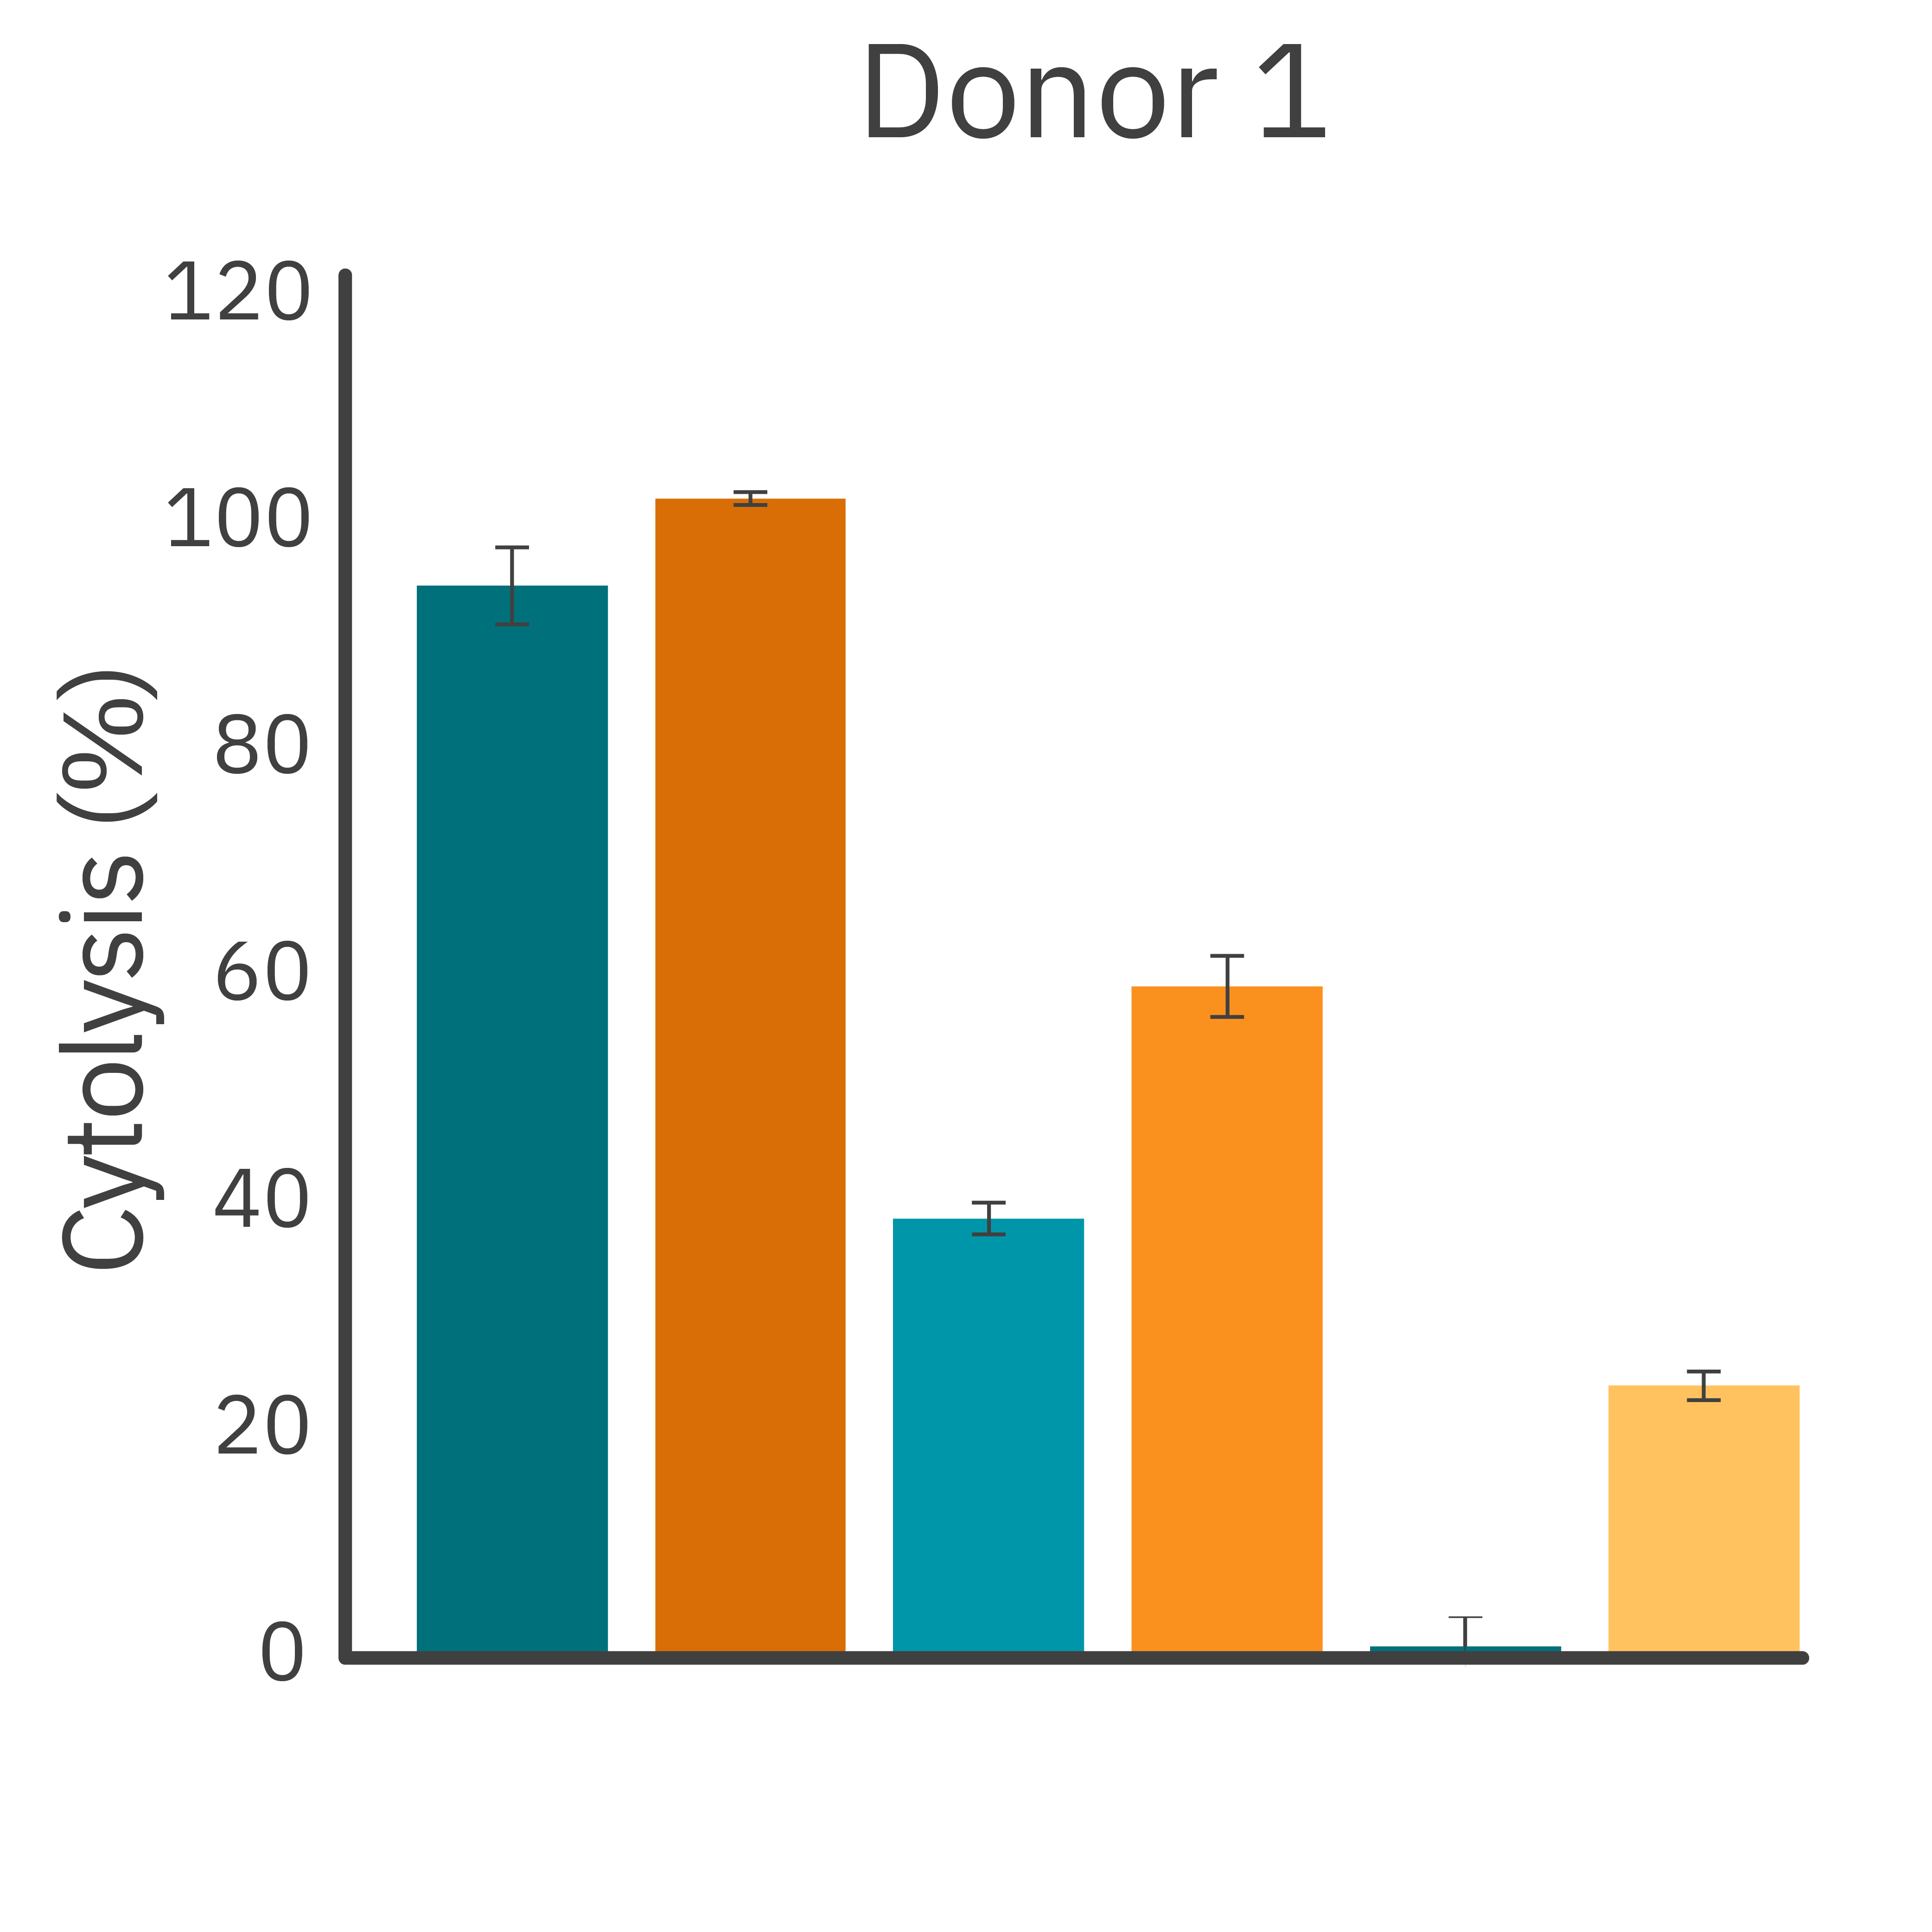 Antibody-dependent cellular cytotoxicity across donors.